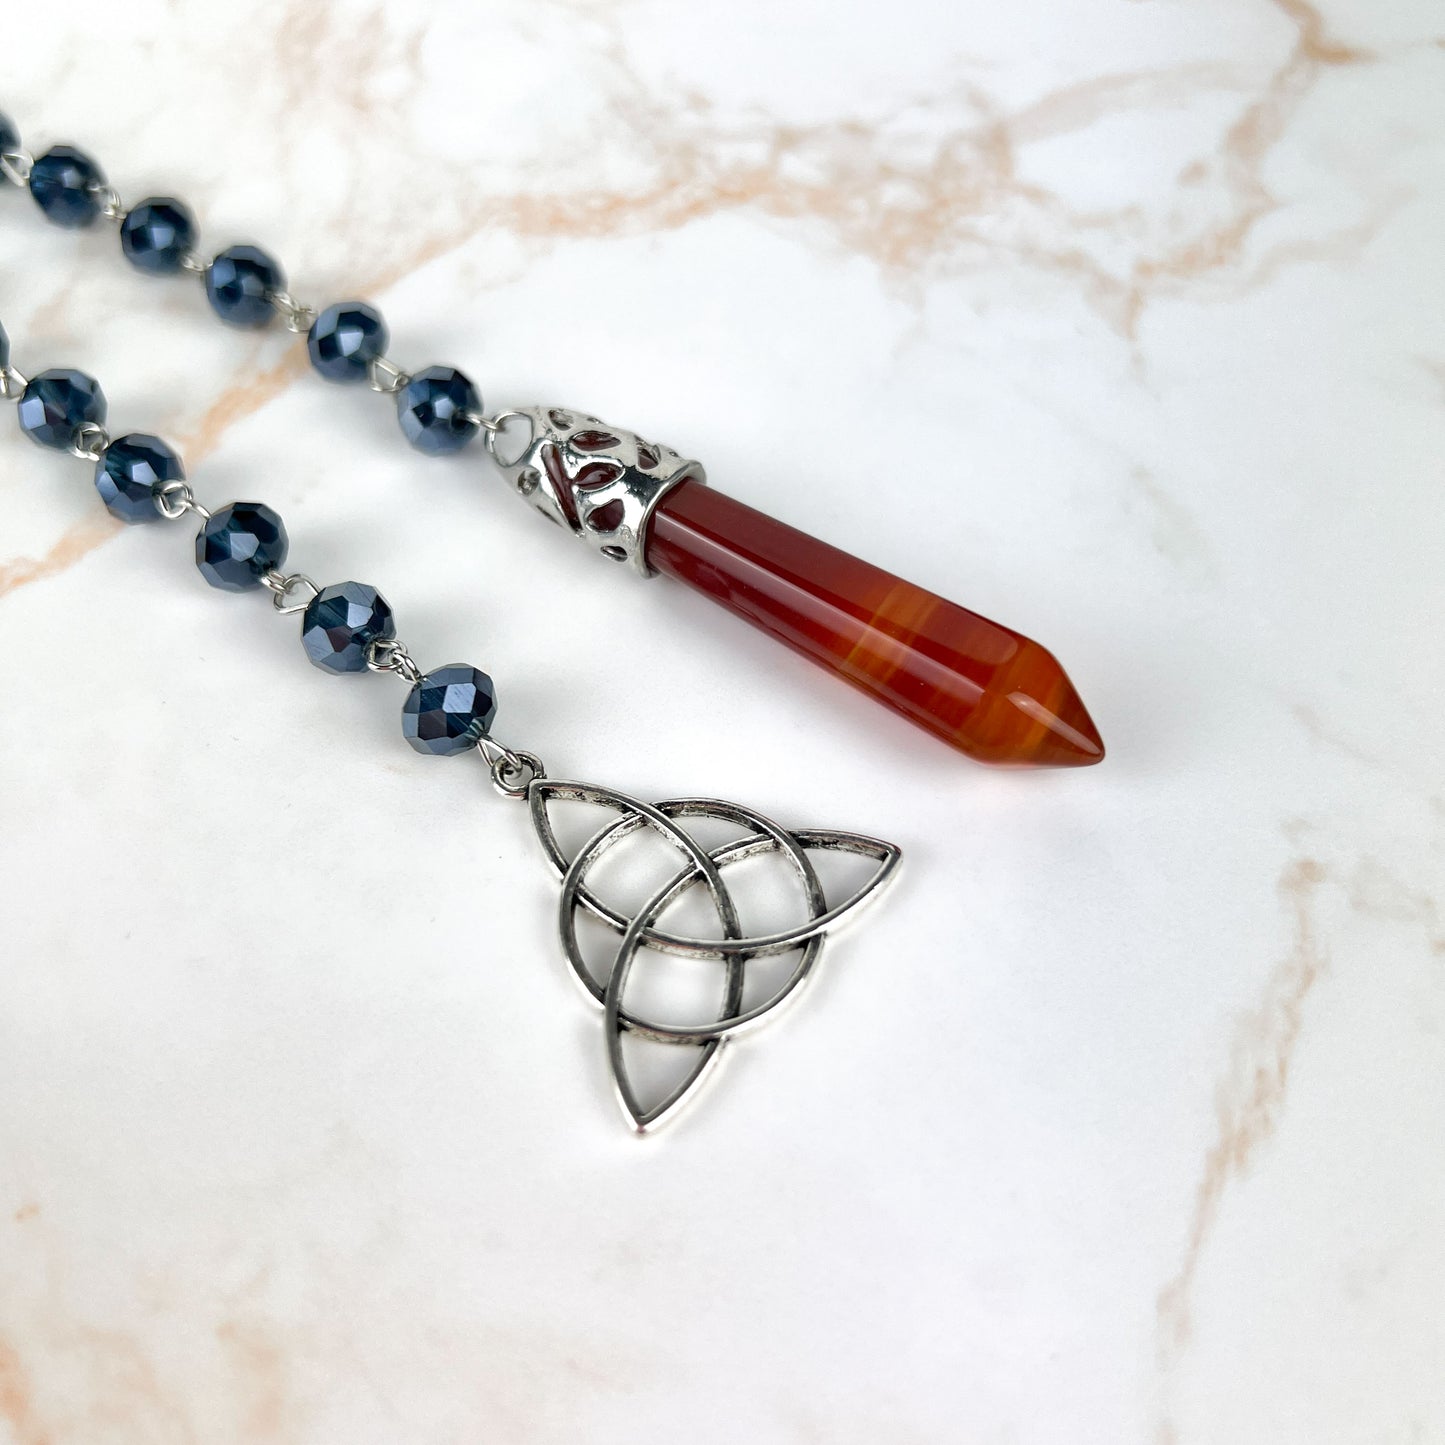 Carnelian gemstone pendulum, rosary chain and triquetra charm